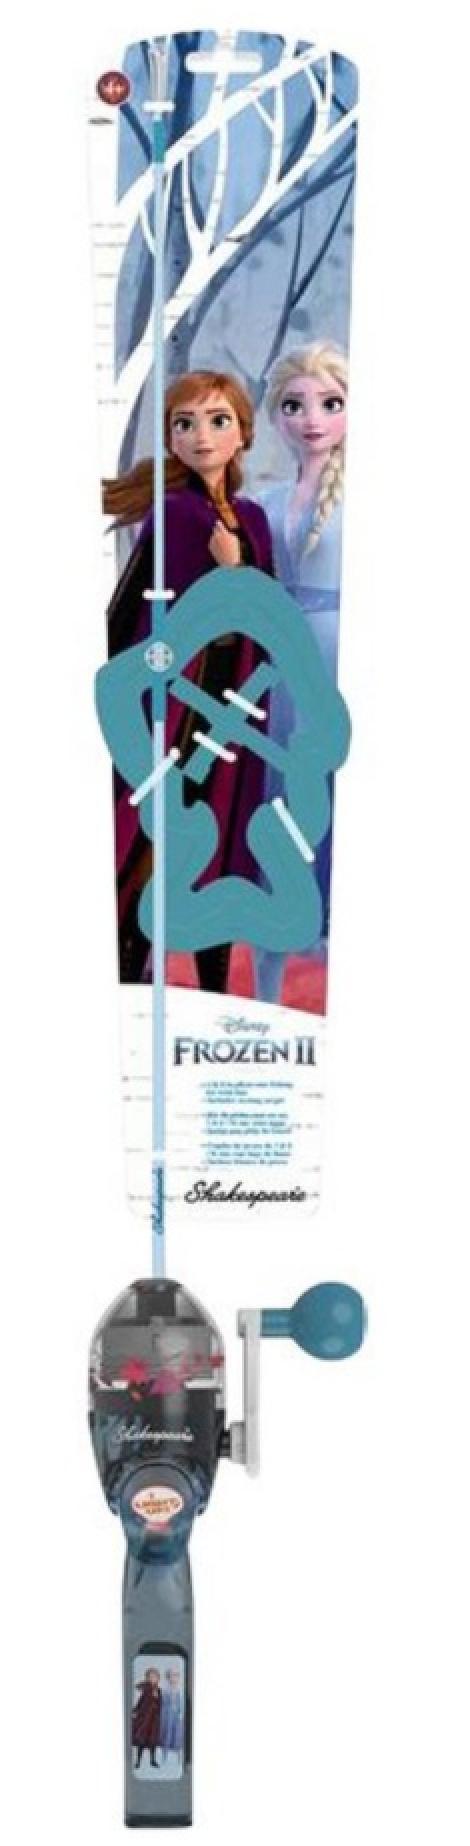 Shakespeare Disney Frozen 2 Lighted Kit